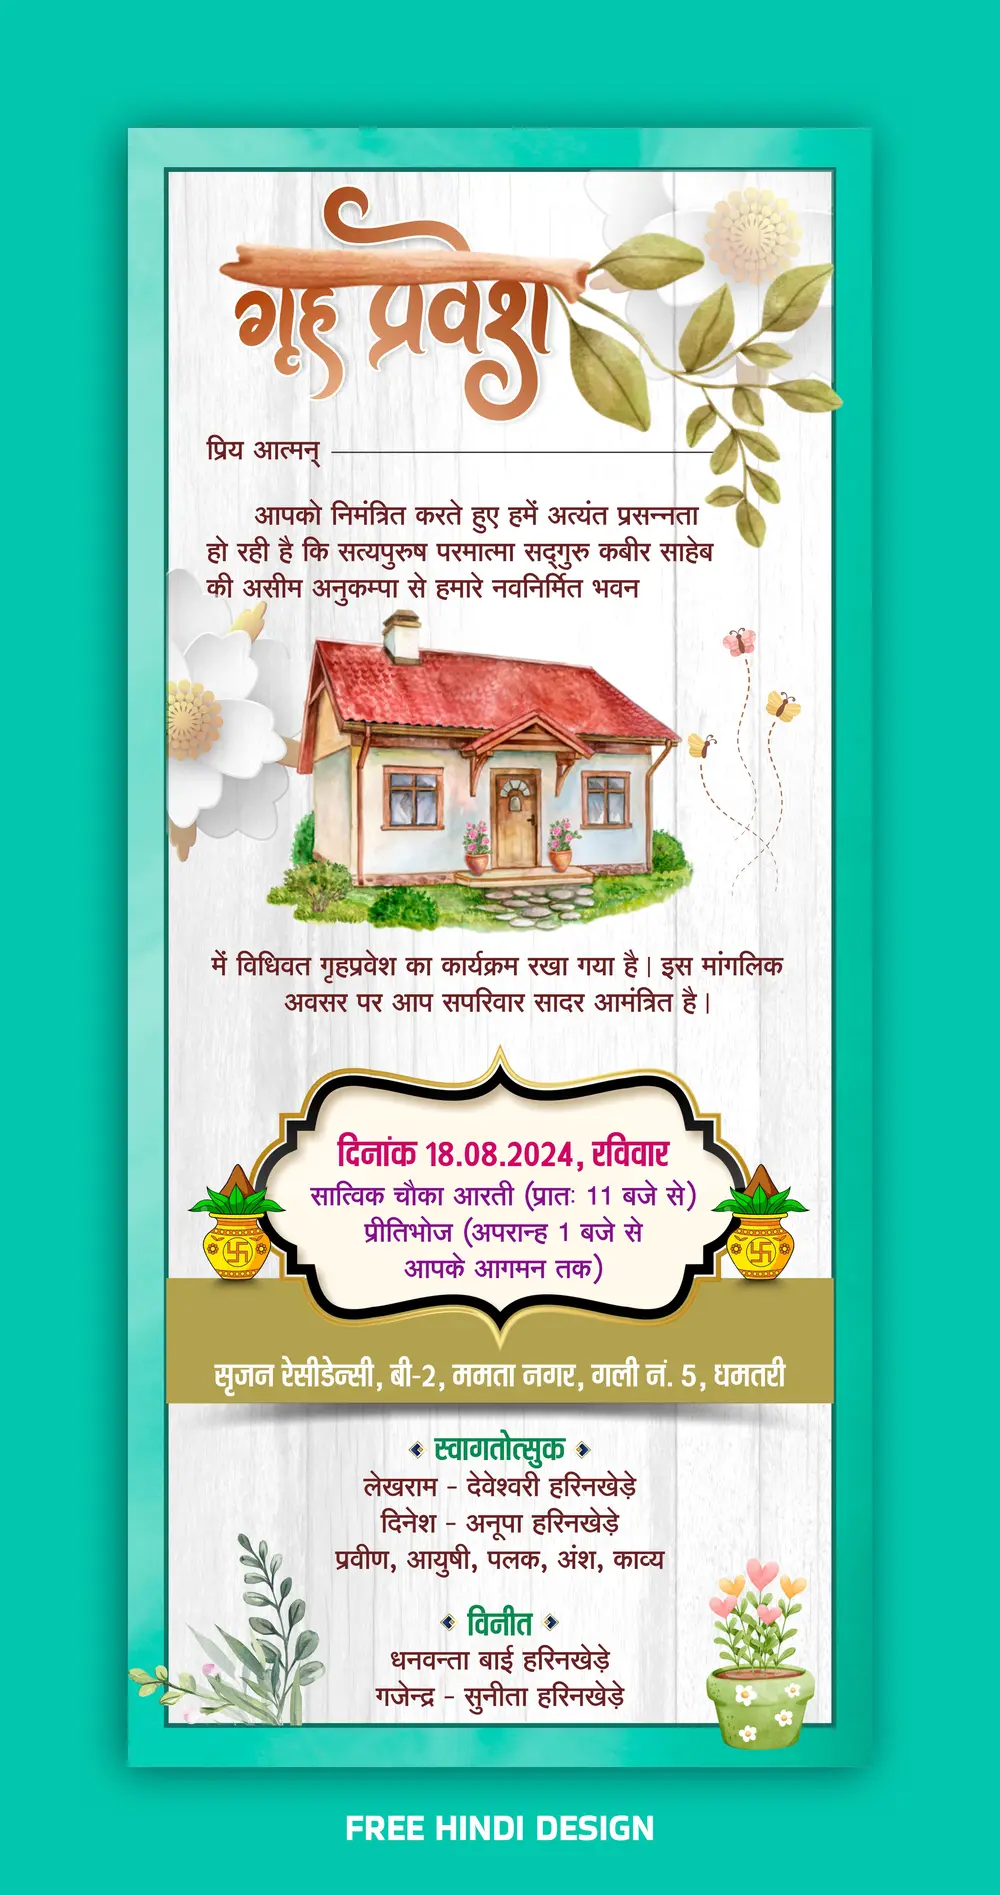 Griha pravesh (house warming) invitation card download 190724